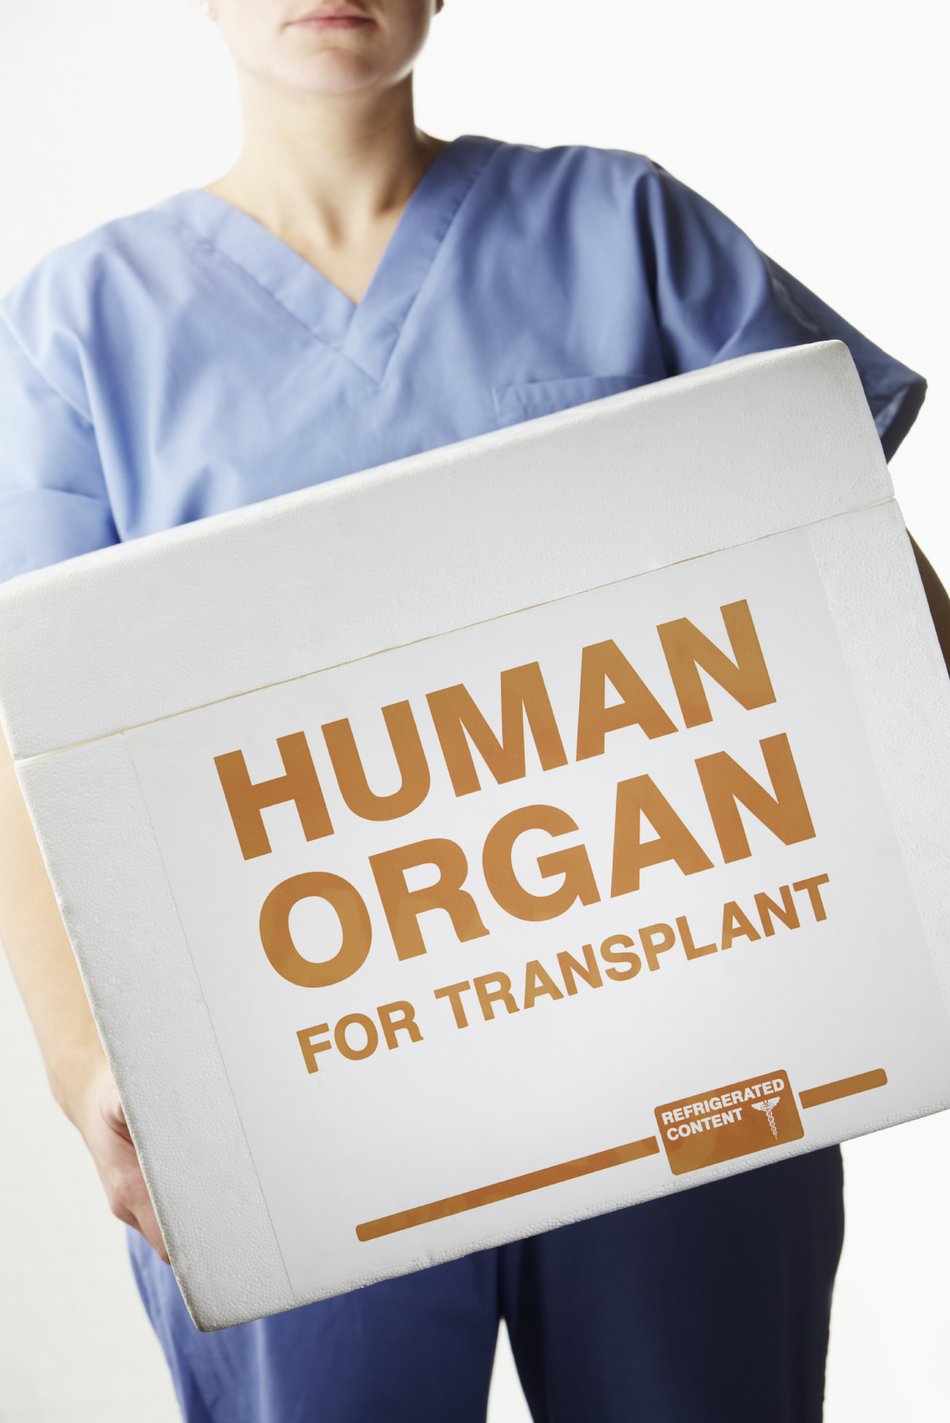 How Living Donor Liver Transplant Works